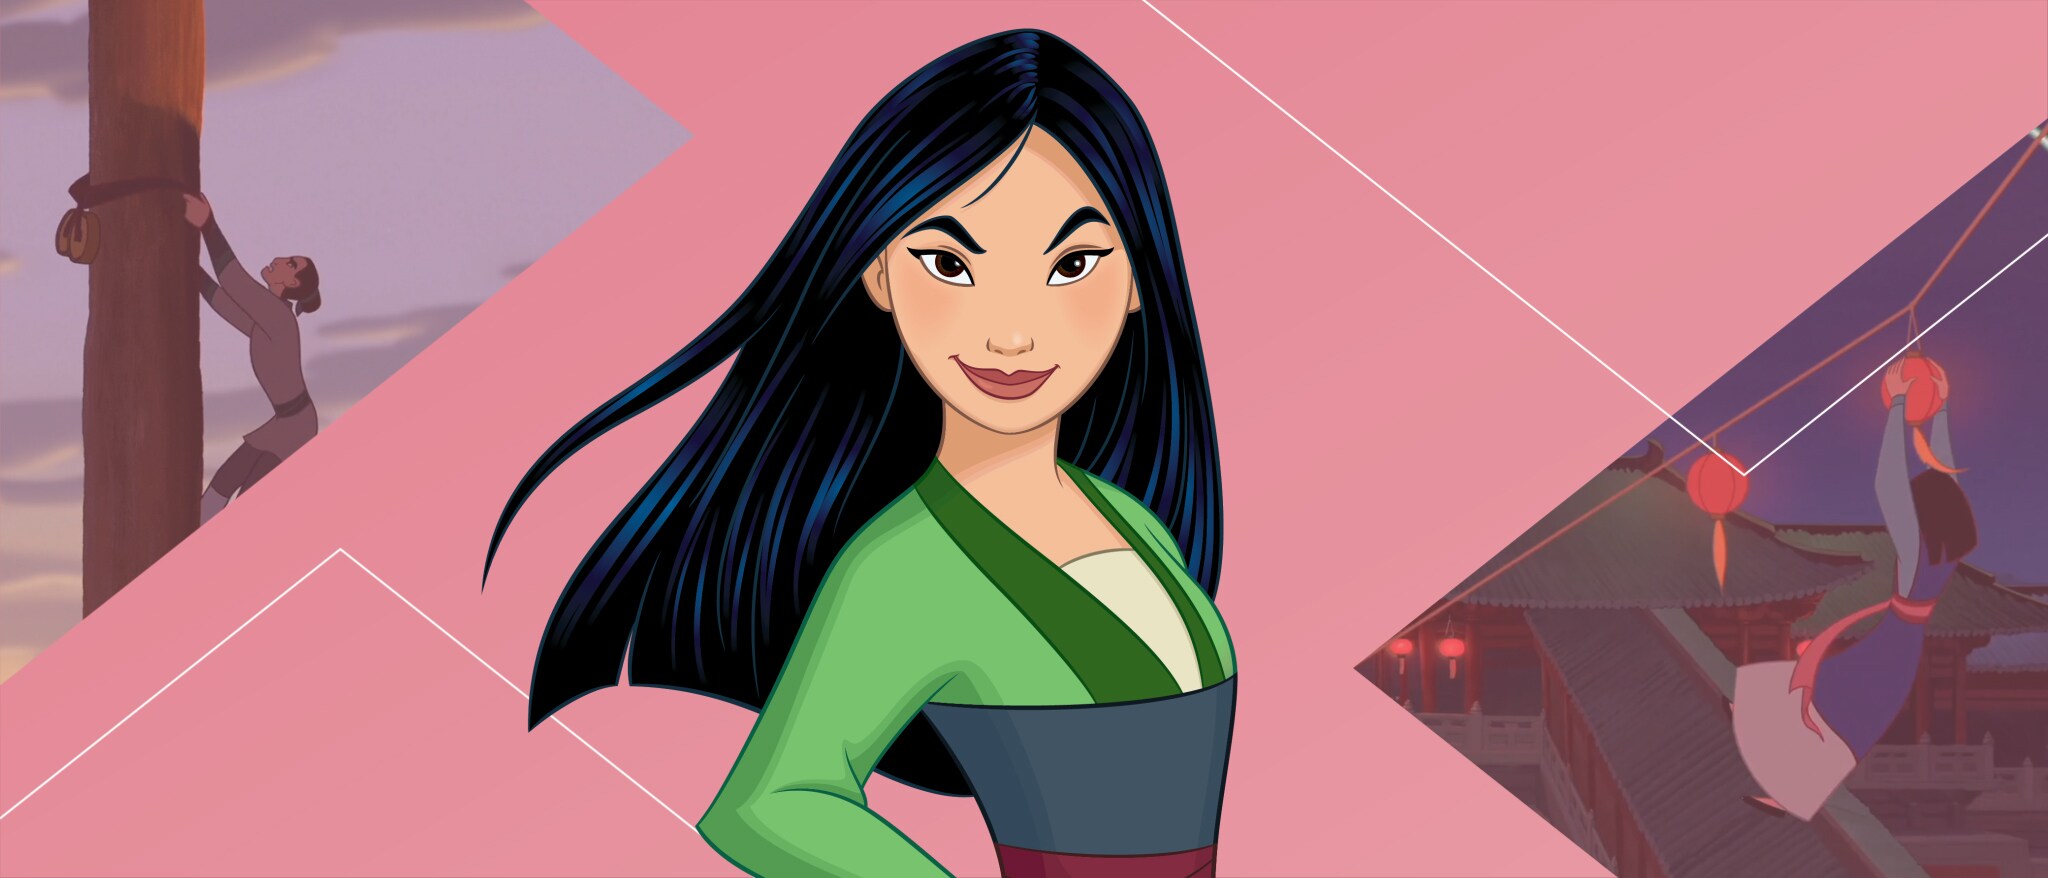 Disney Cartoon Character Mulan Warrior Princess Portrait